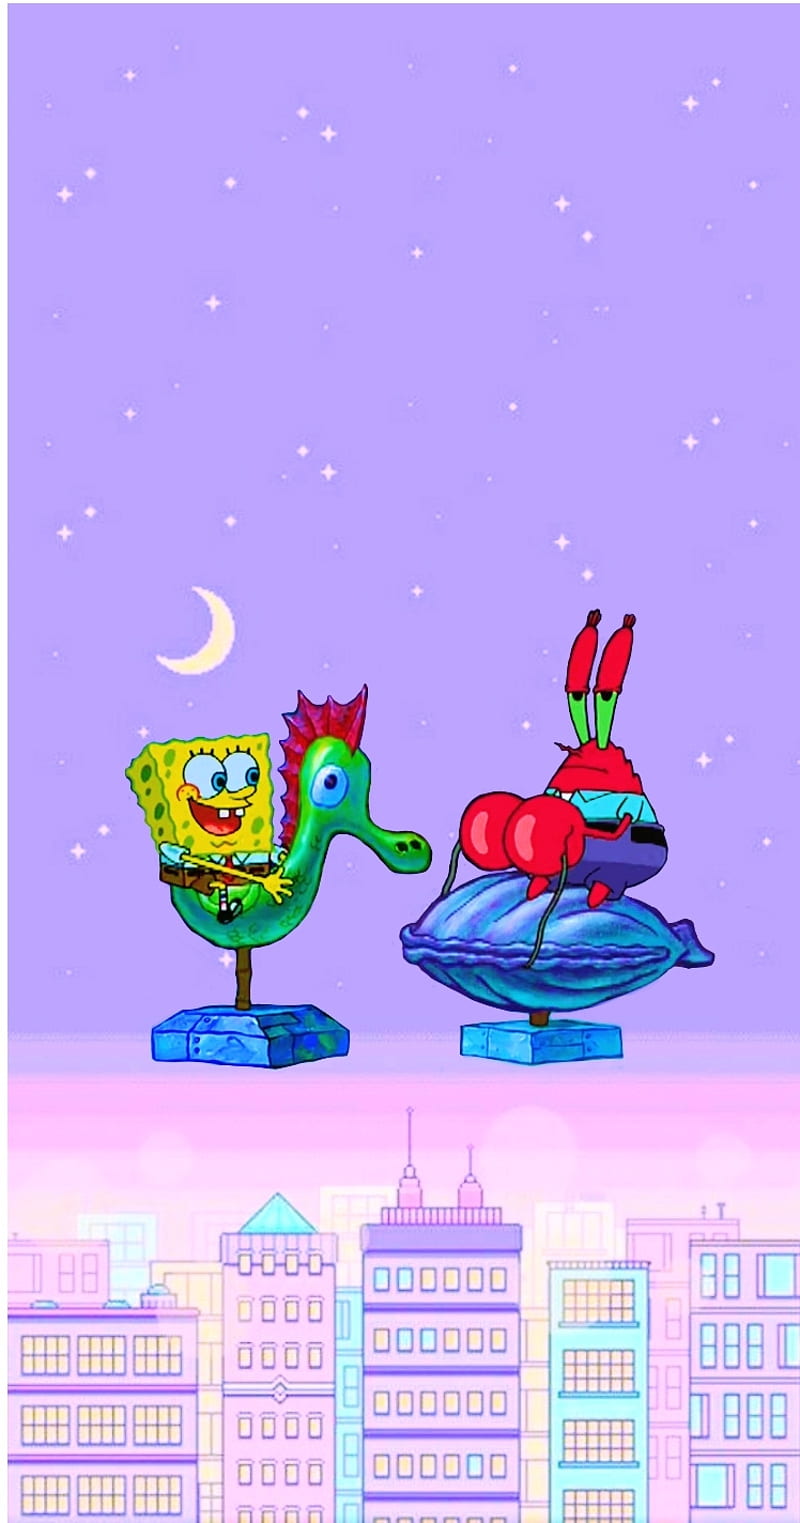 IPhone wallpaper of SpongeBob and Gary on a carousel - SpongeBob